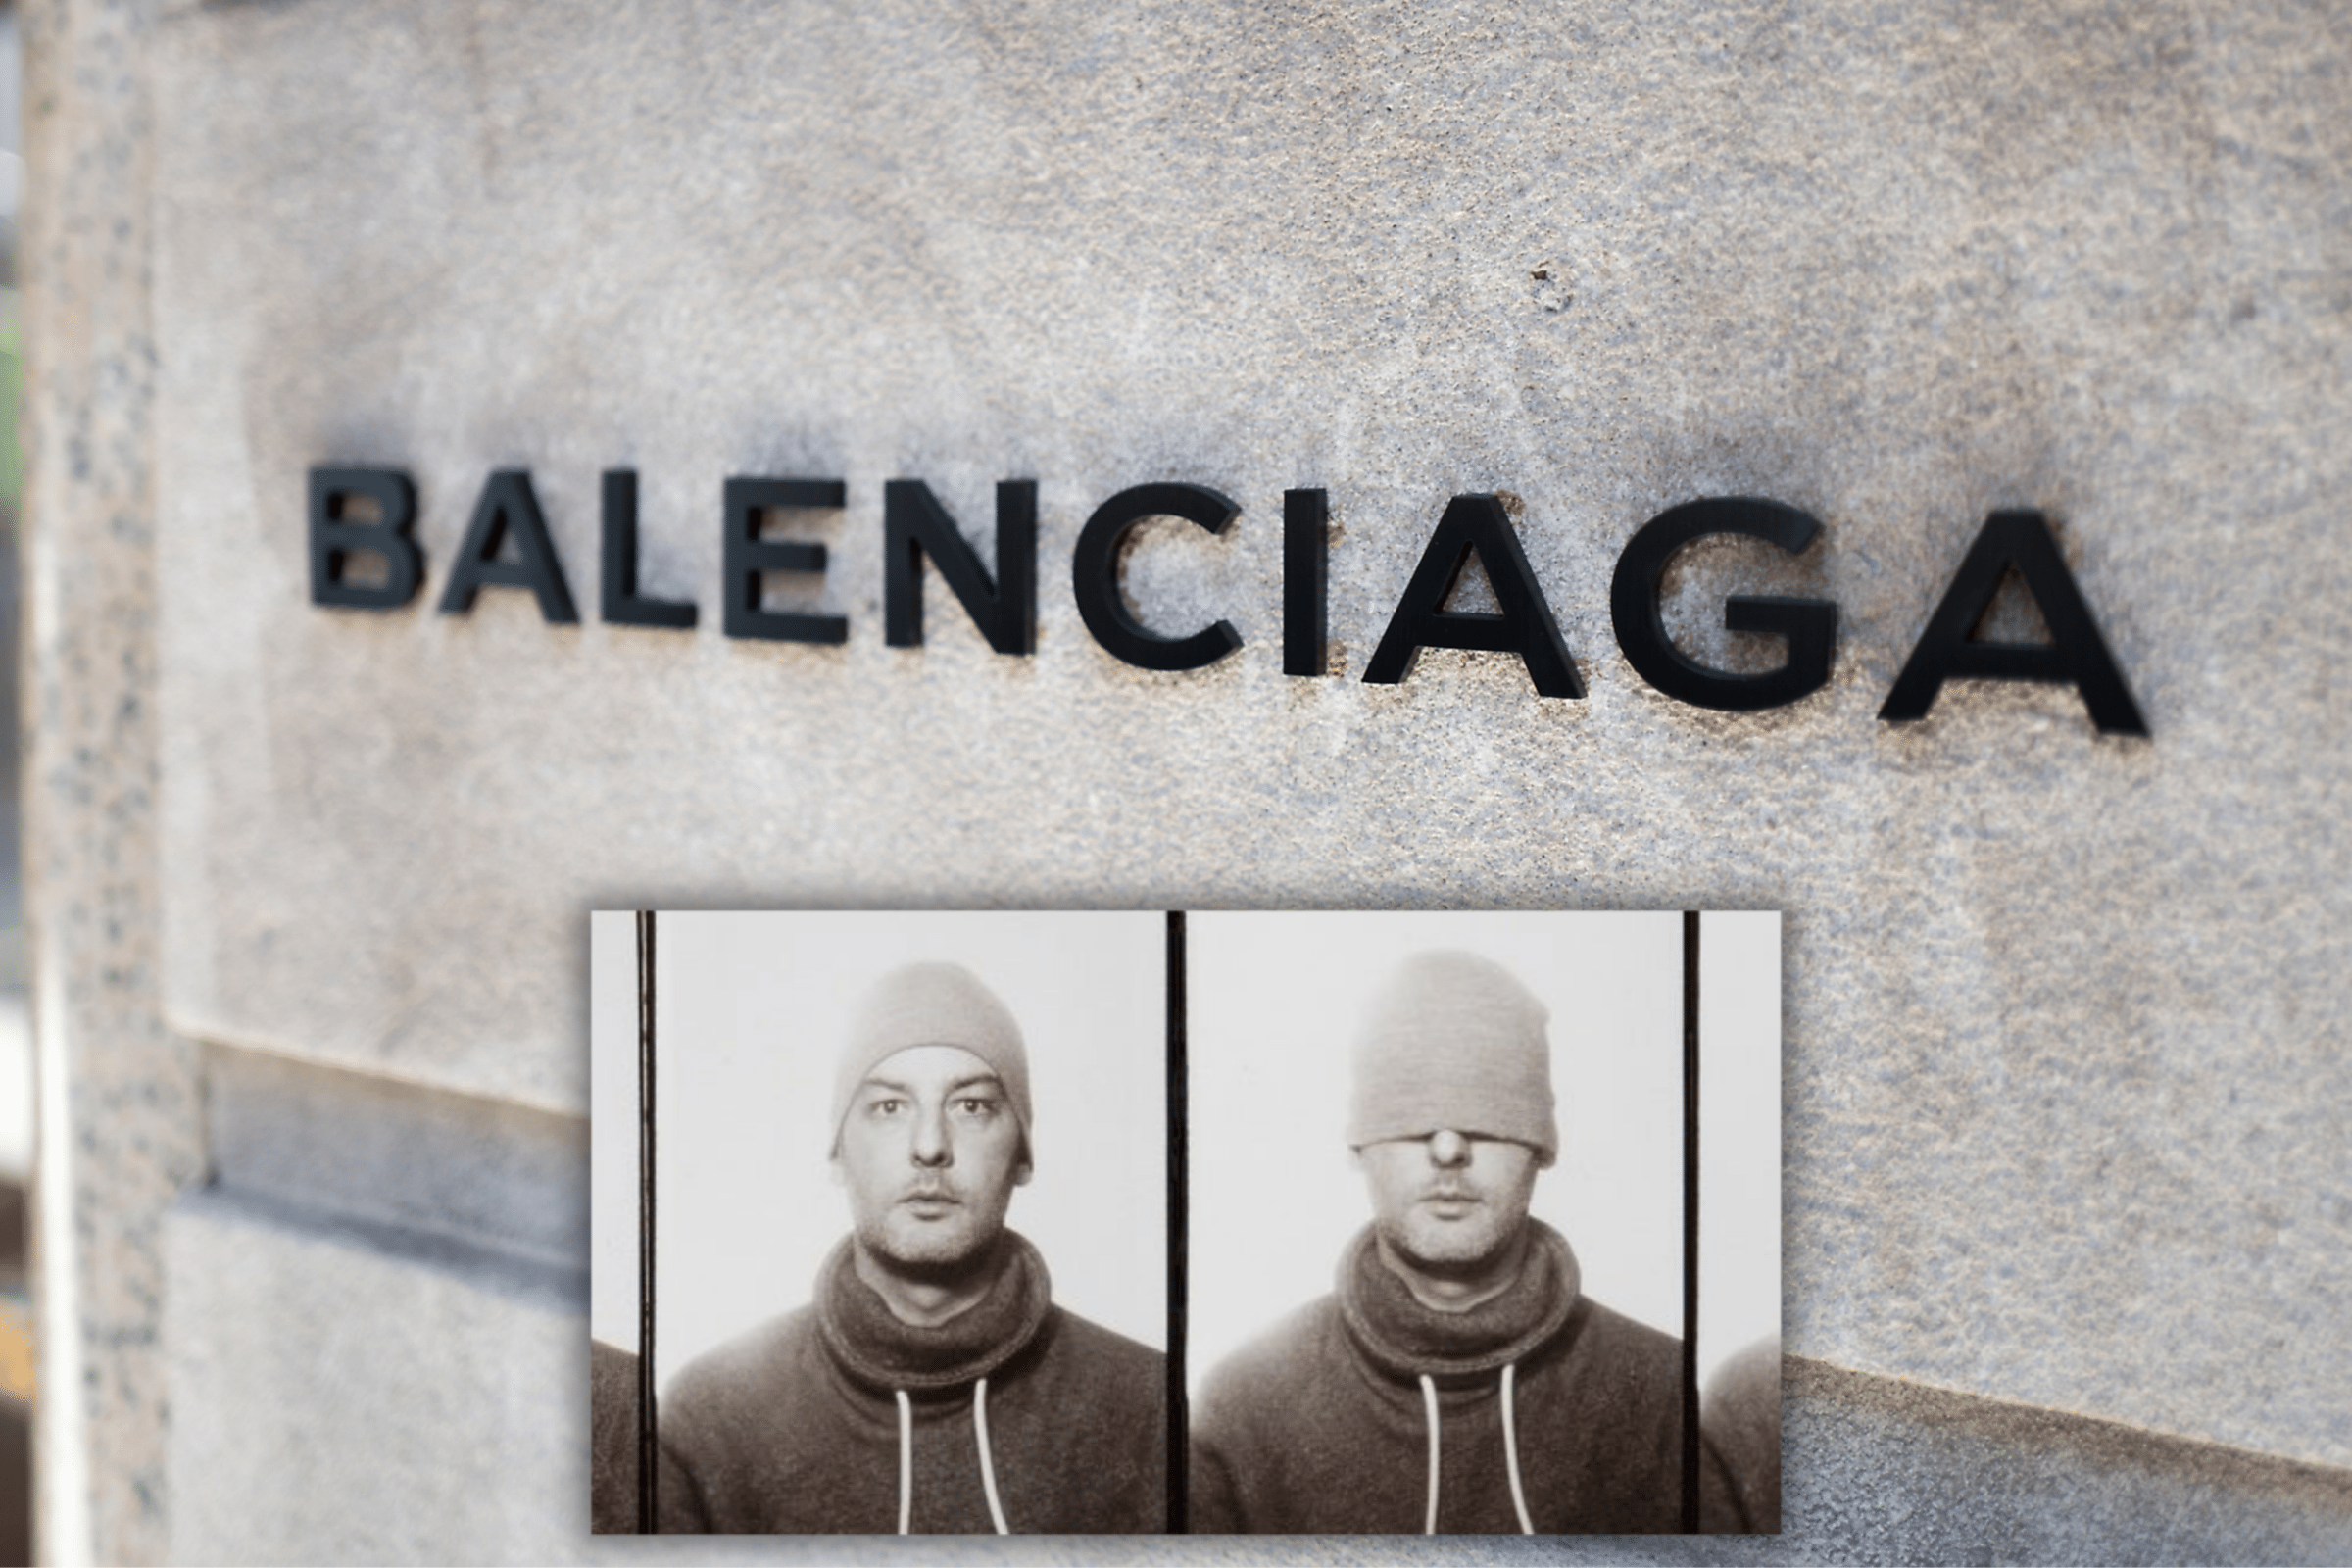 Balenciaga under fire over 'creepy' ads of kids with 'bondage